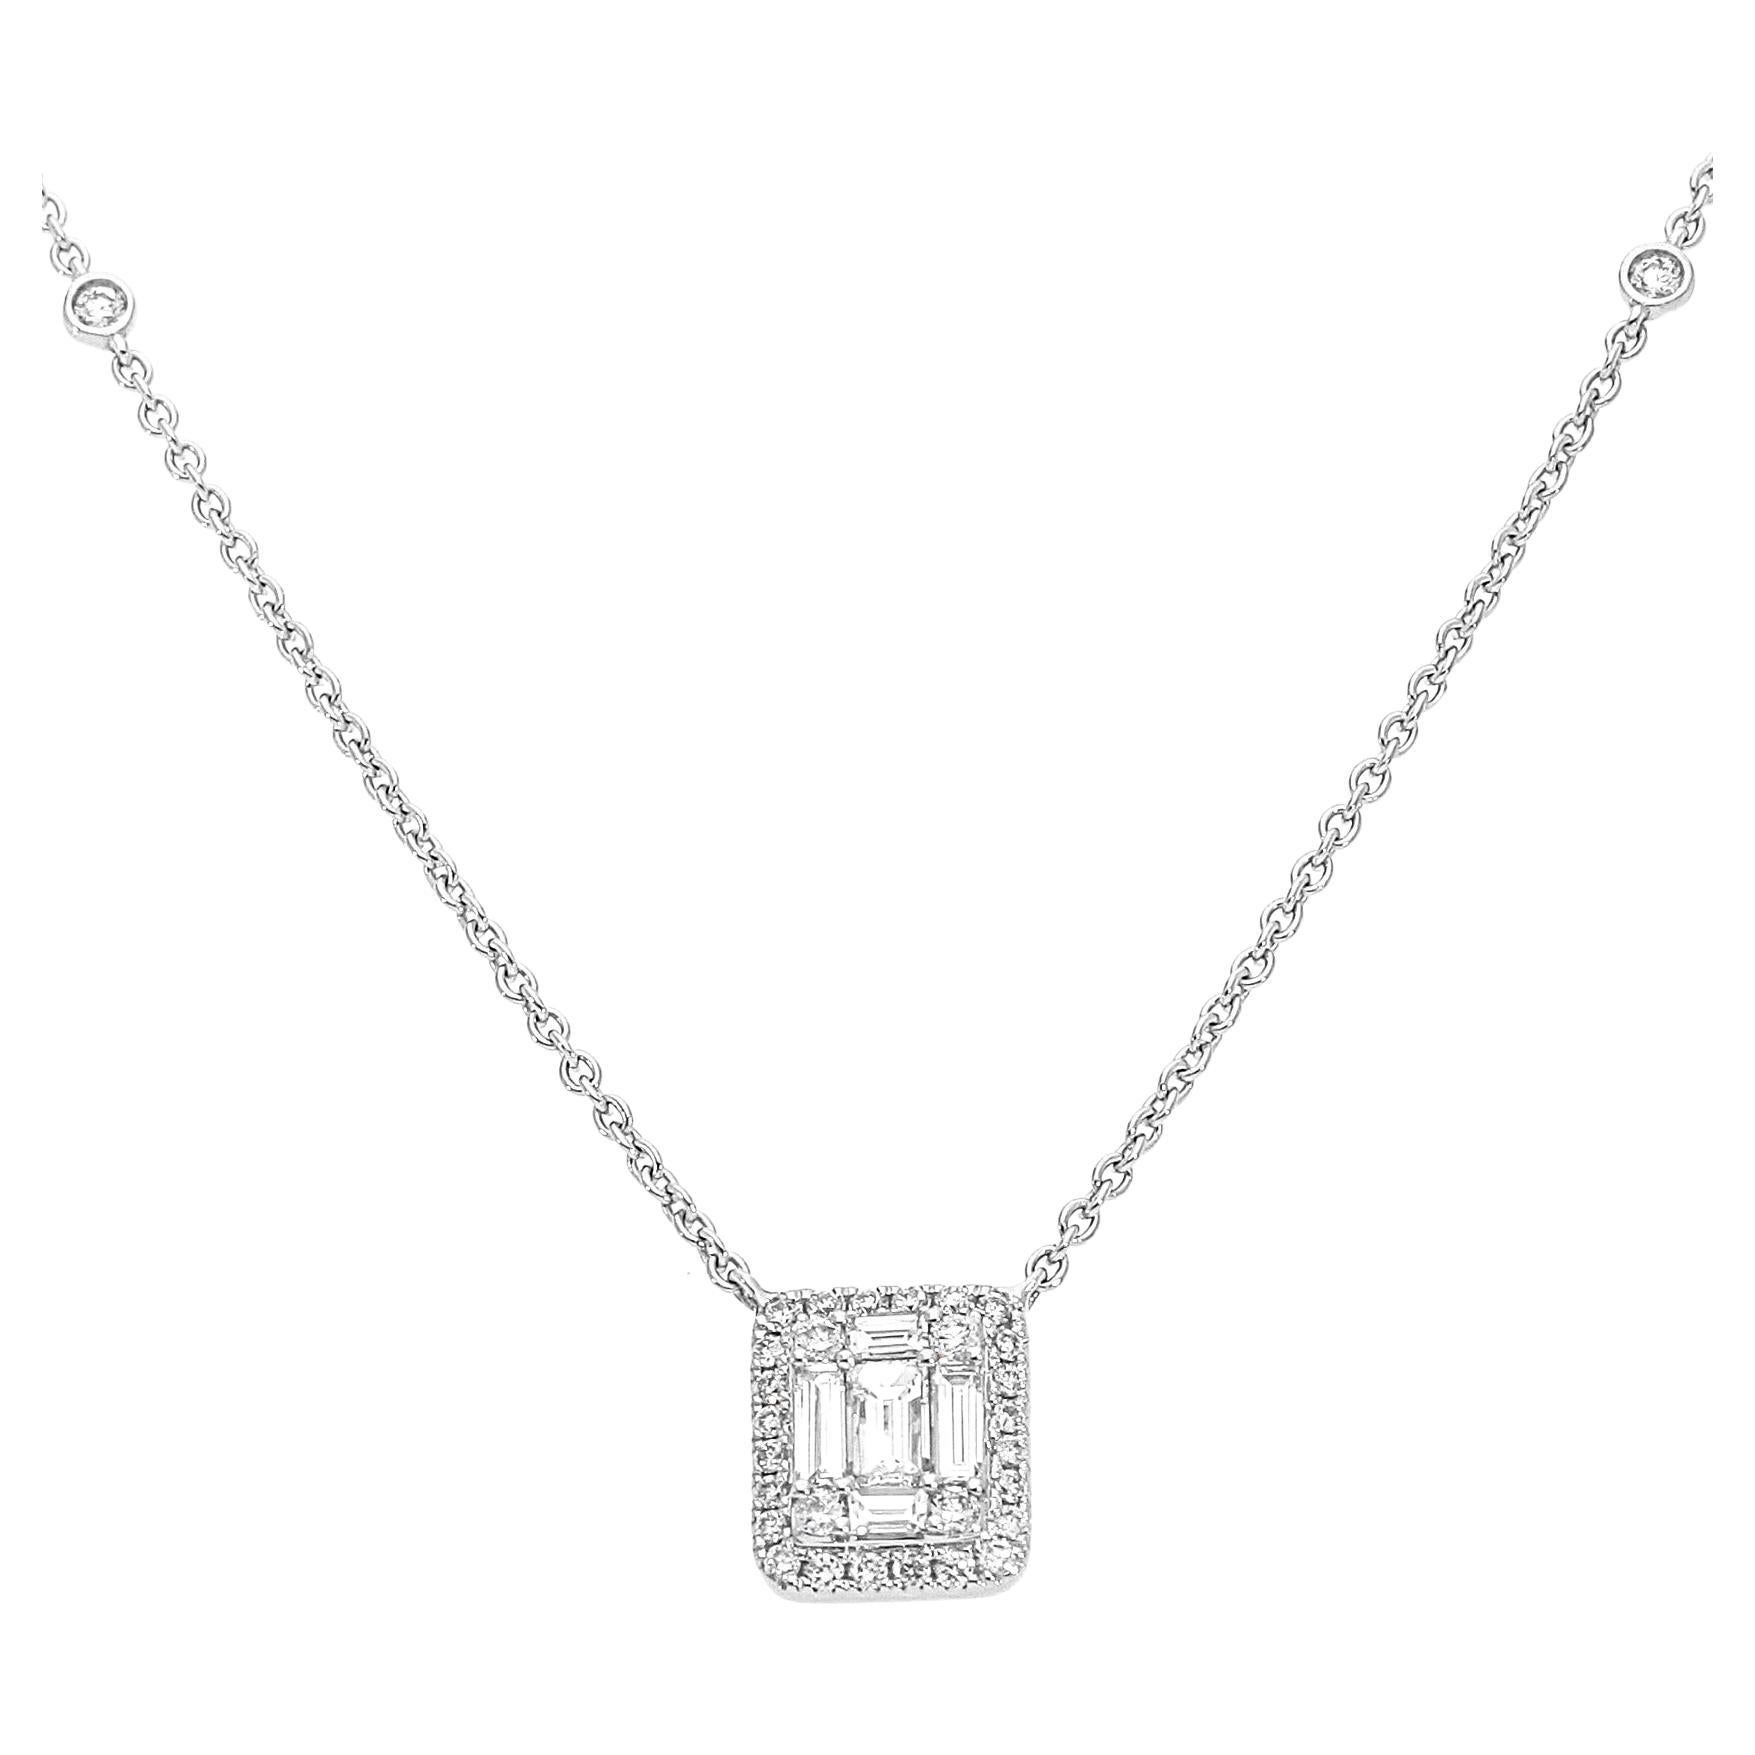 18 Karat White Gold Chain Necklace with Rectangular Diamonds Pendant